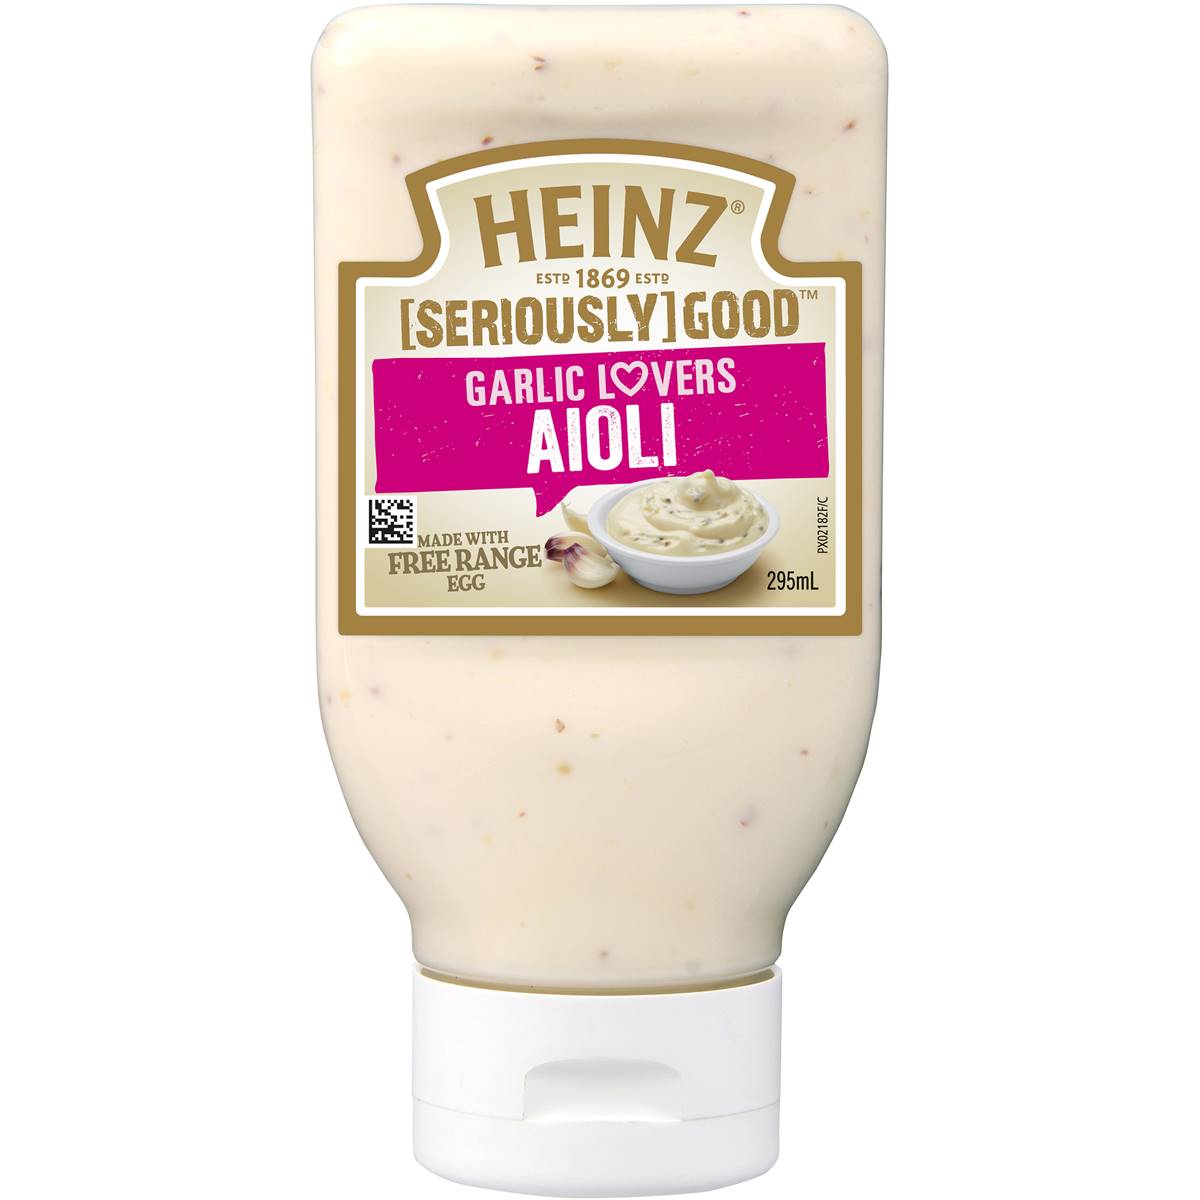 Heinz Seriously Good Garlic Lovers Aioli 295ml